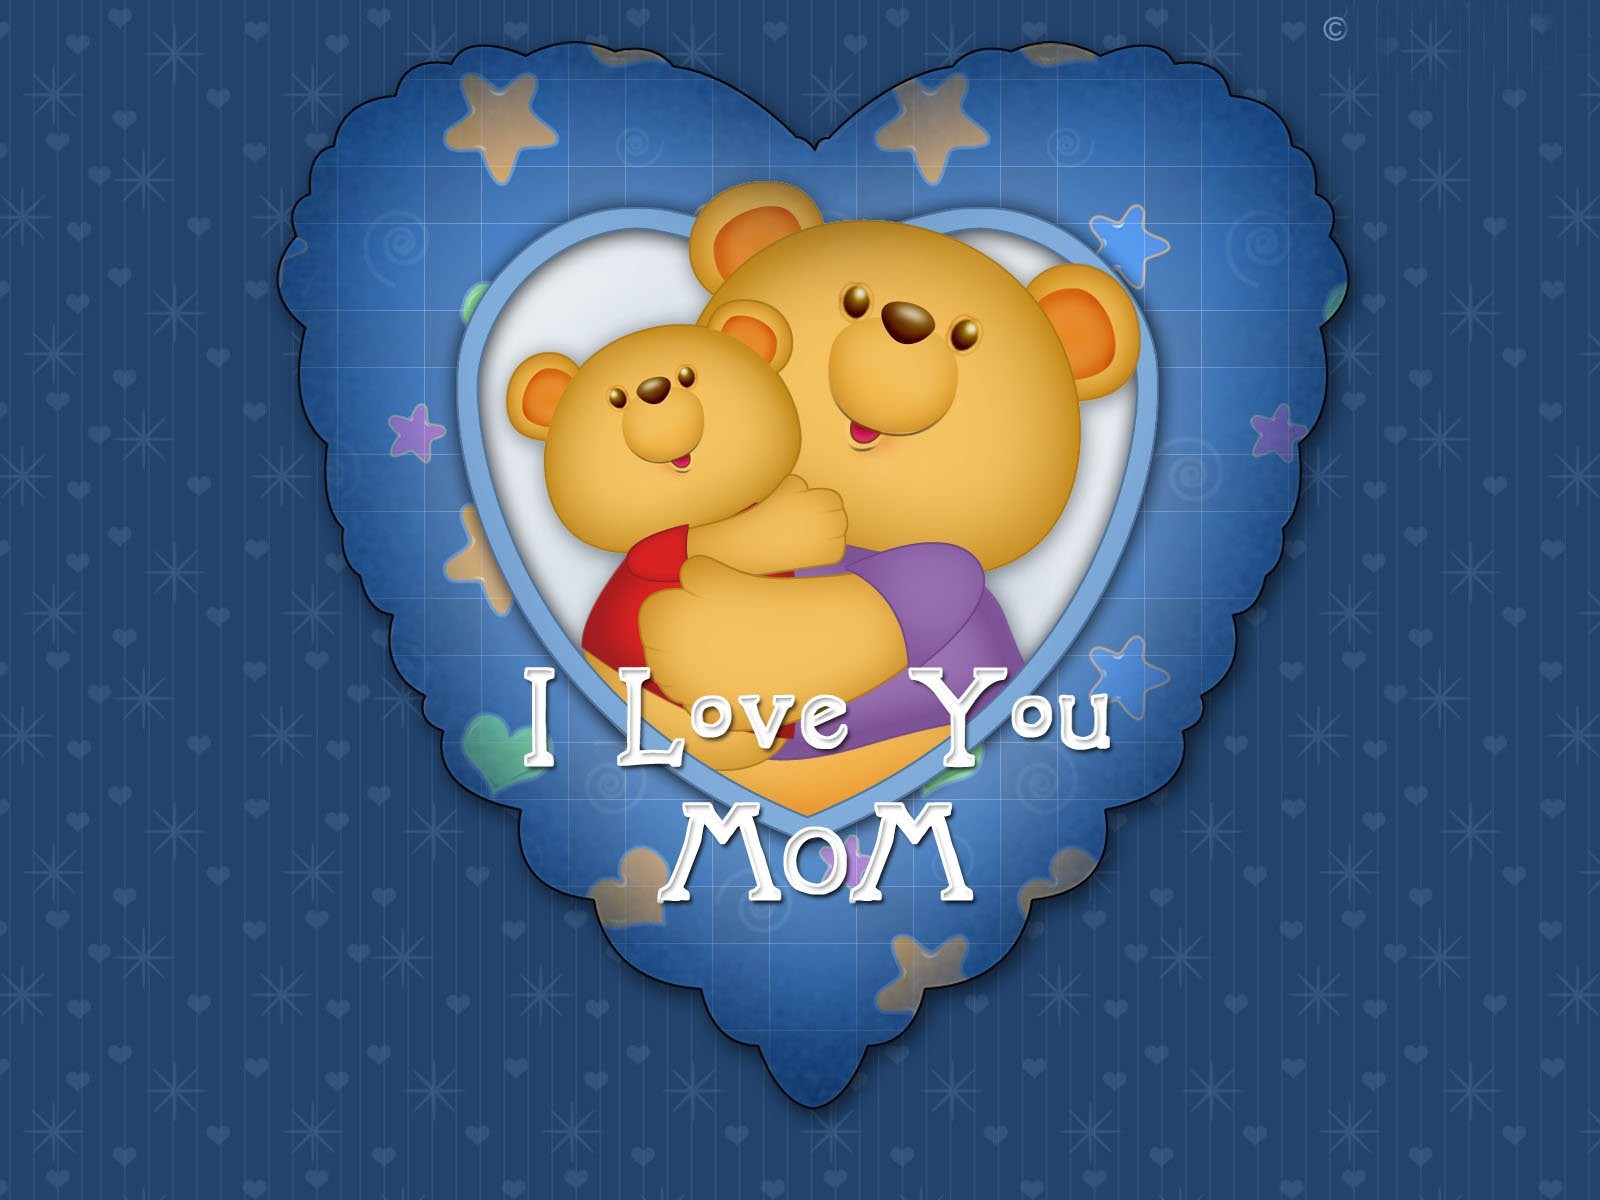 Love You Mom - HD Wallpaper 